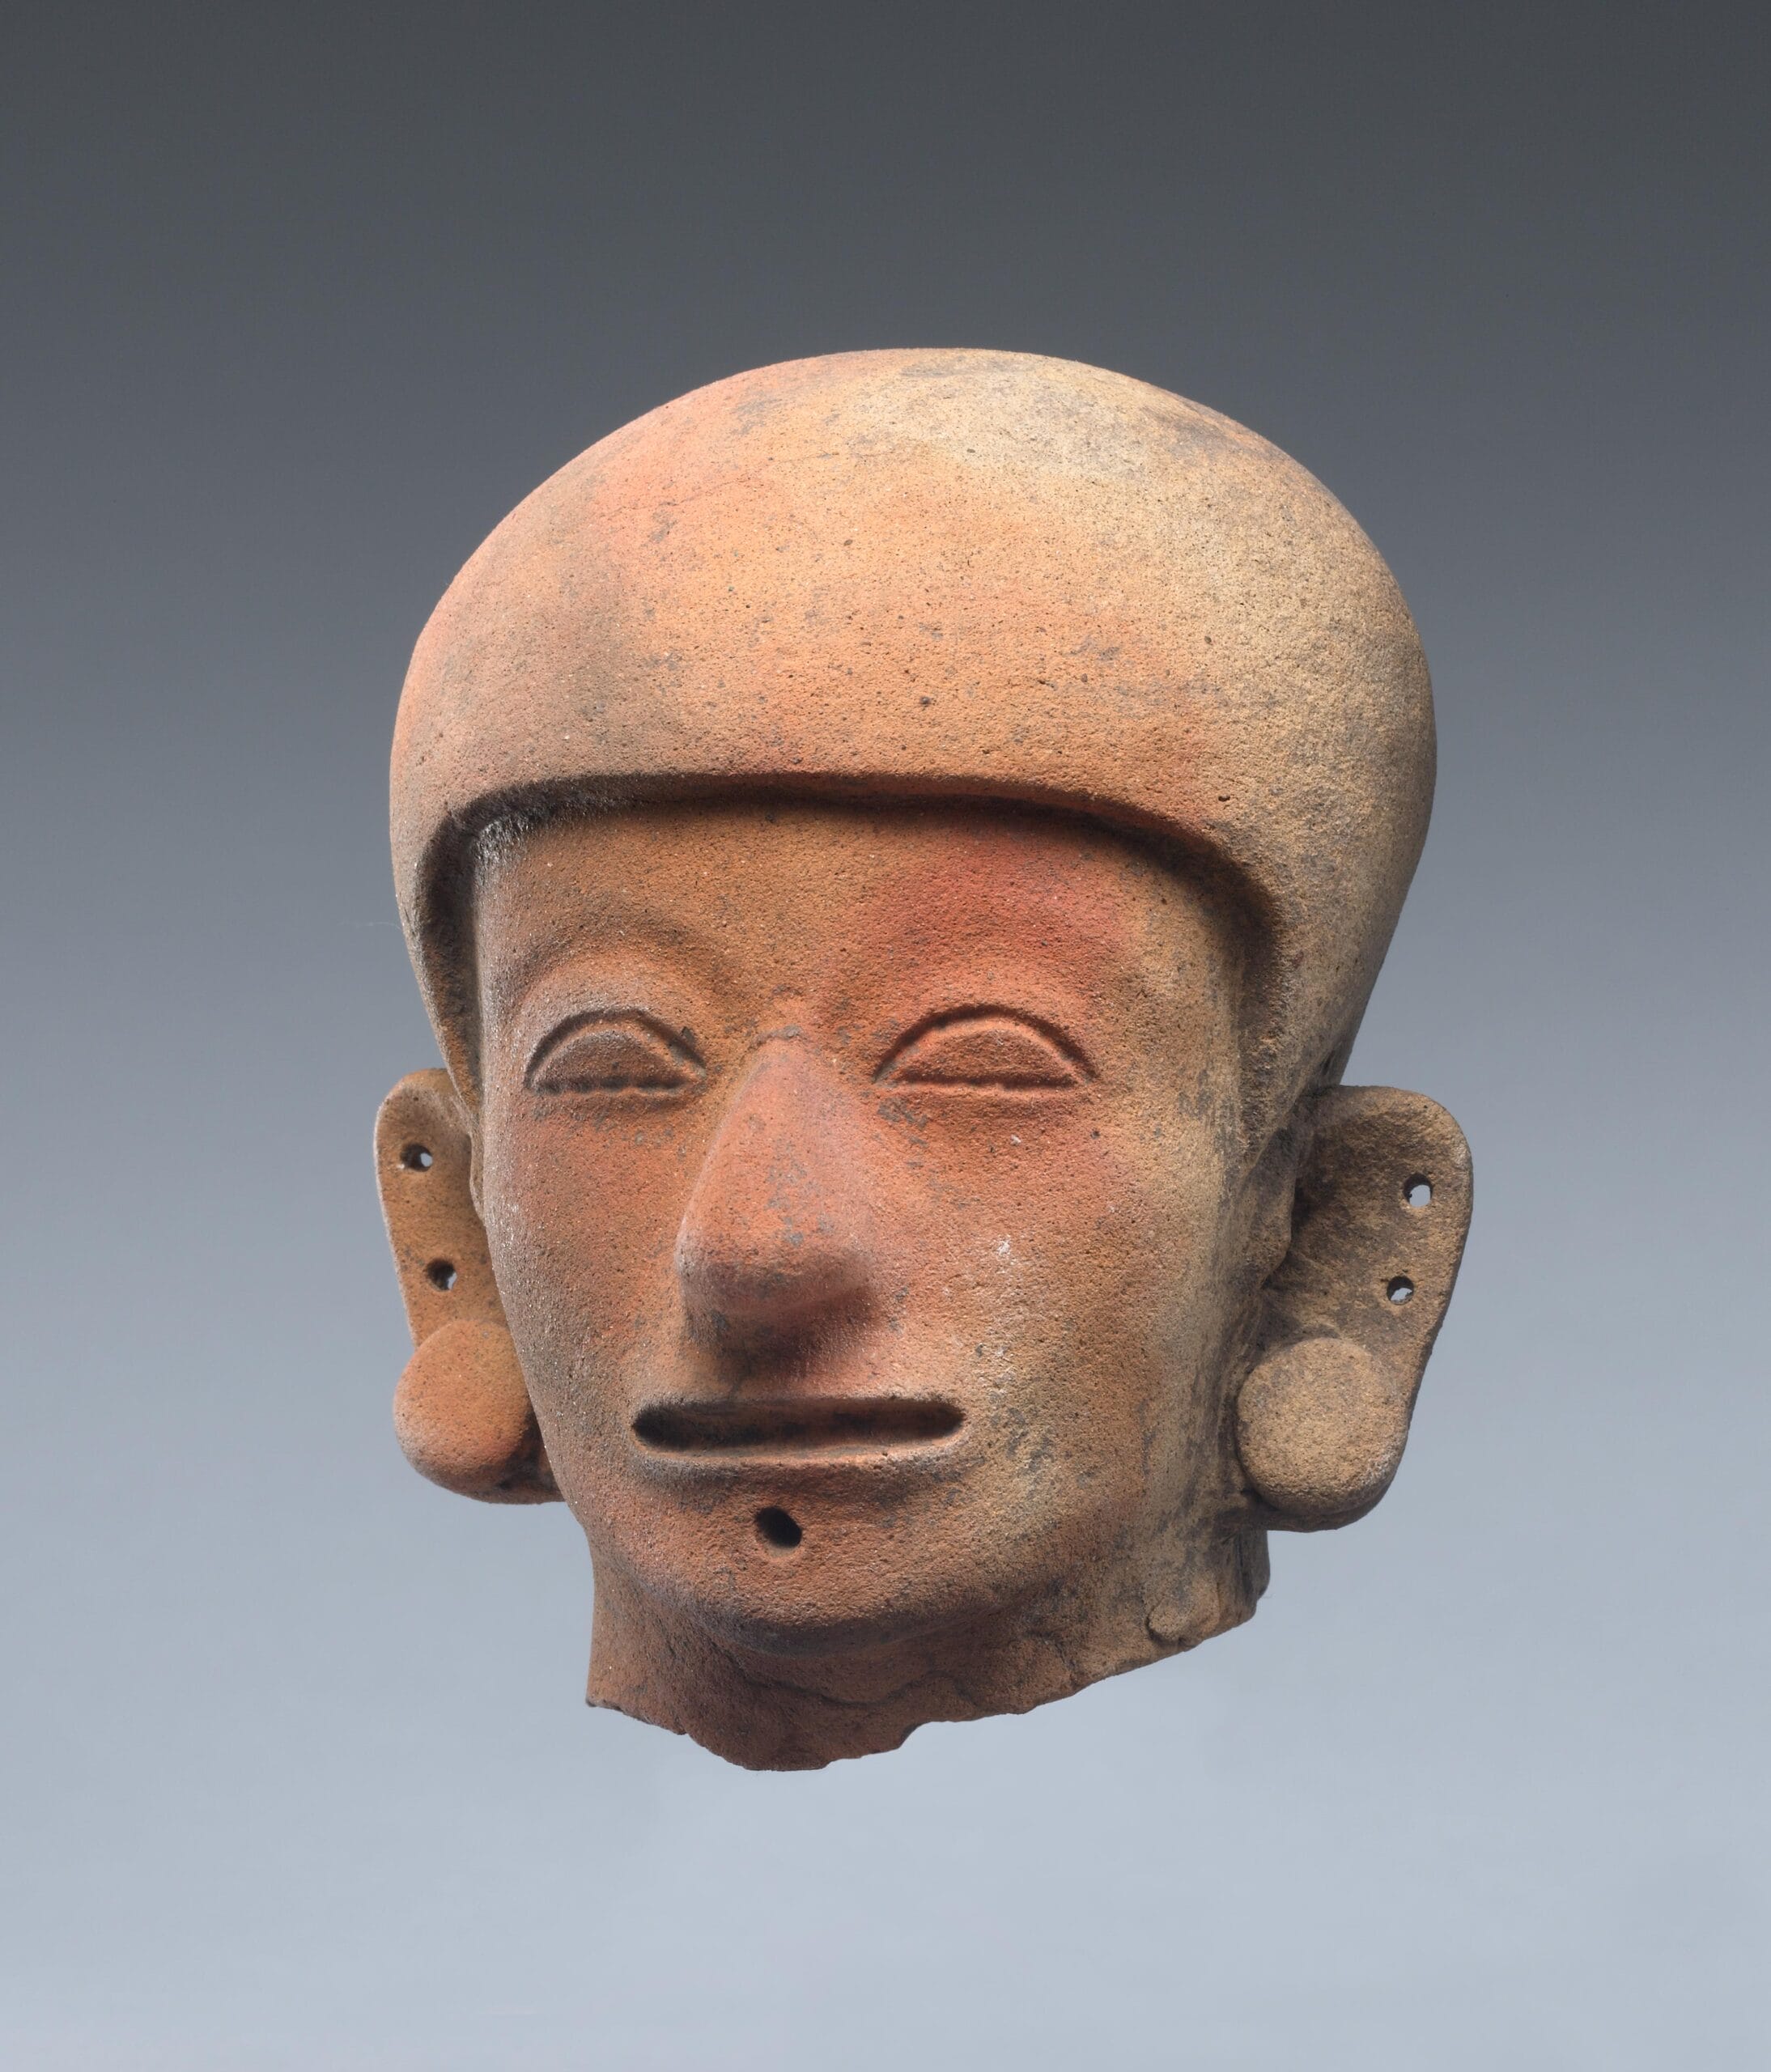 Ceramic human head wearing a helmet and ear spools.